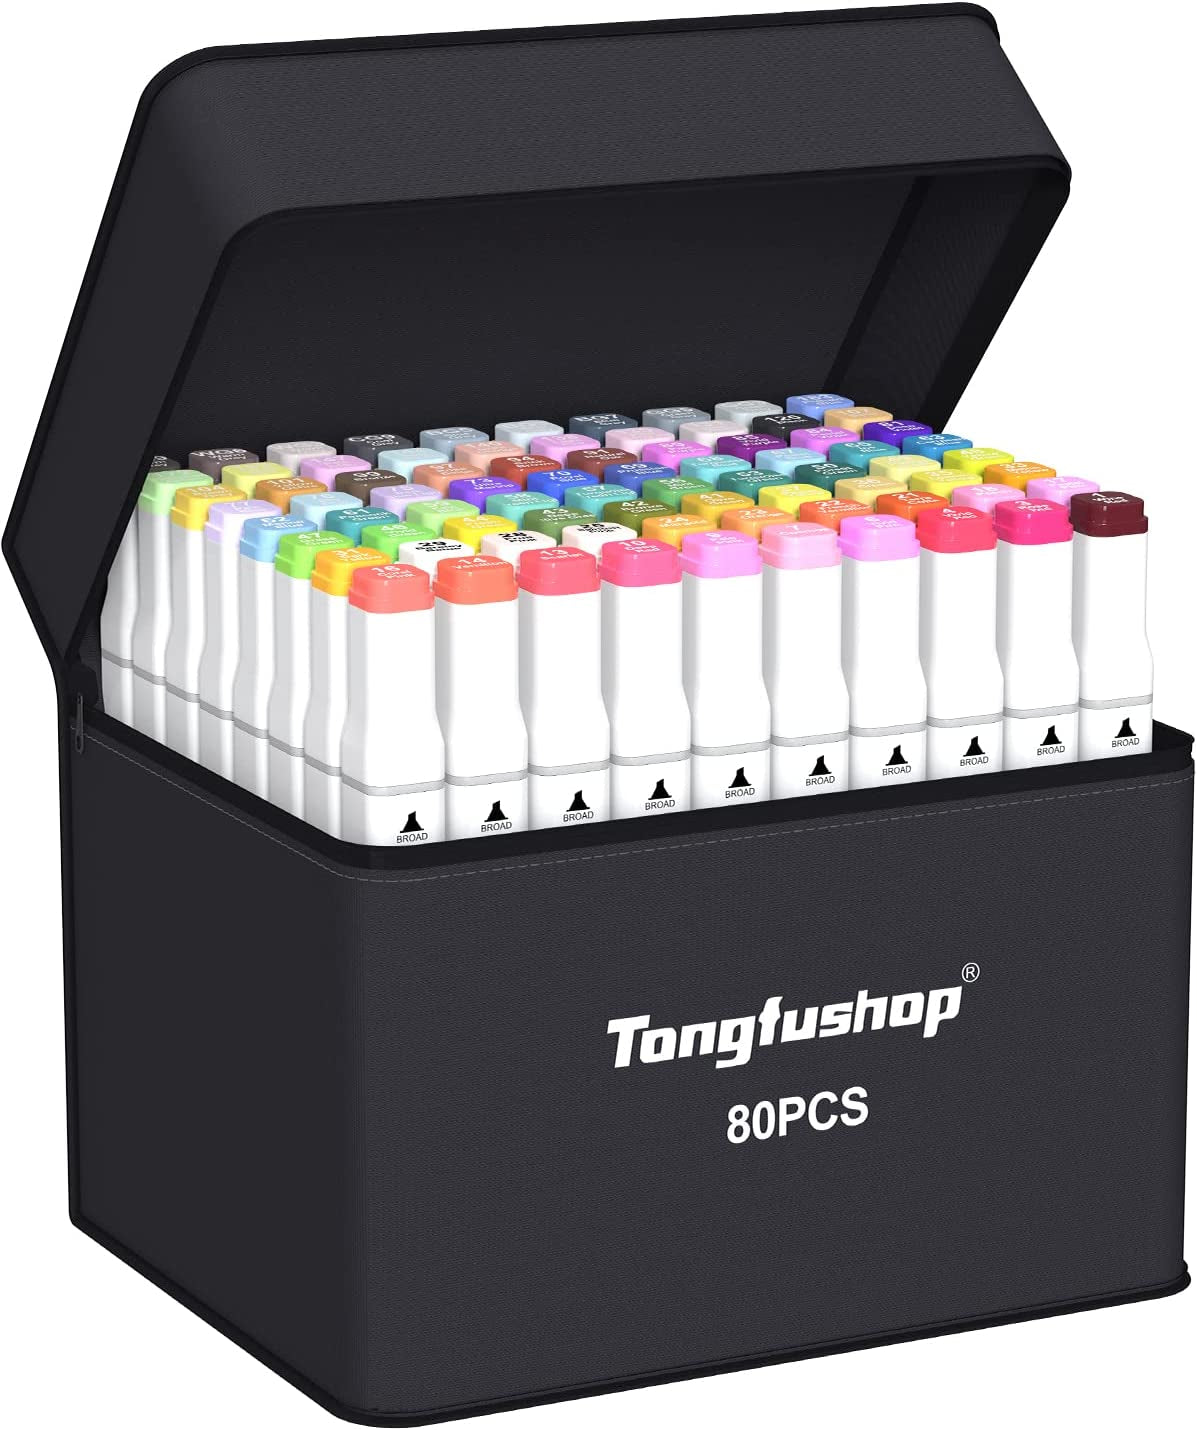 Tongfushop Illustration Marker Set 60 Colors Quick Drying Good Coloring